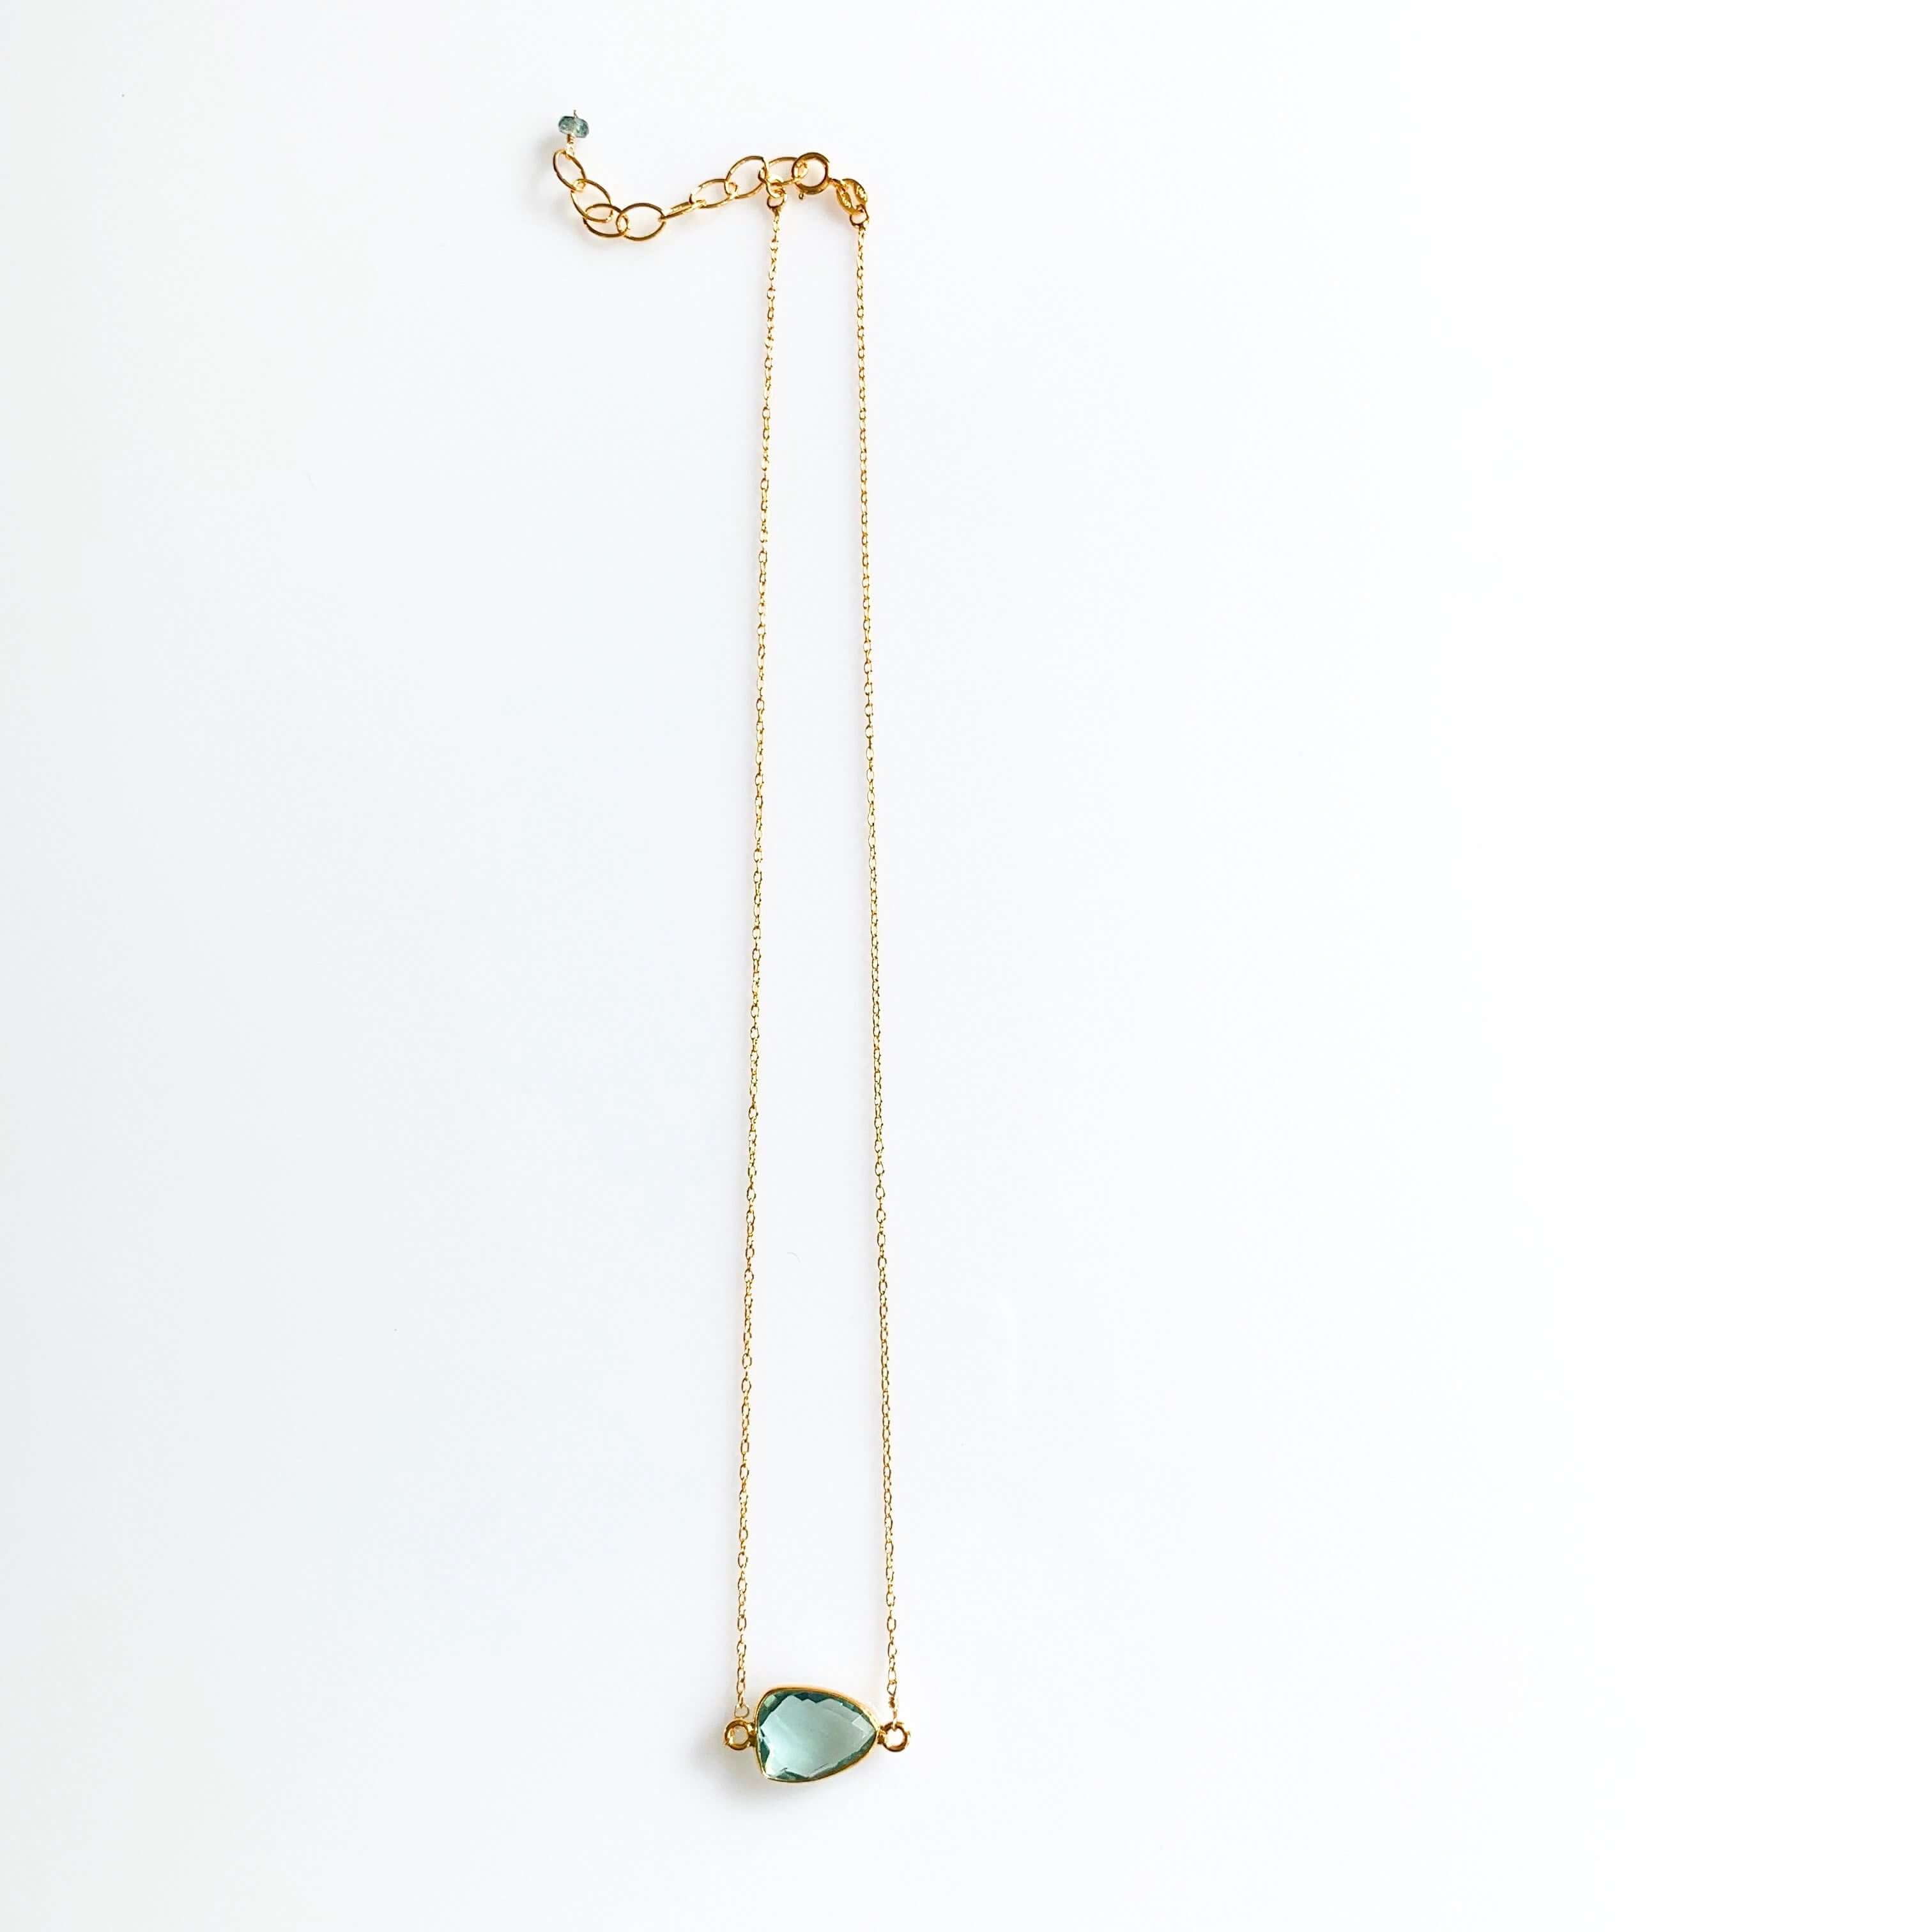 Bezel-Set Green Amethysts in a 14k Gold Necklace